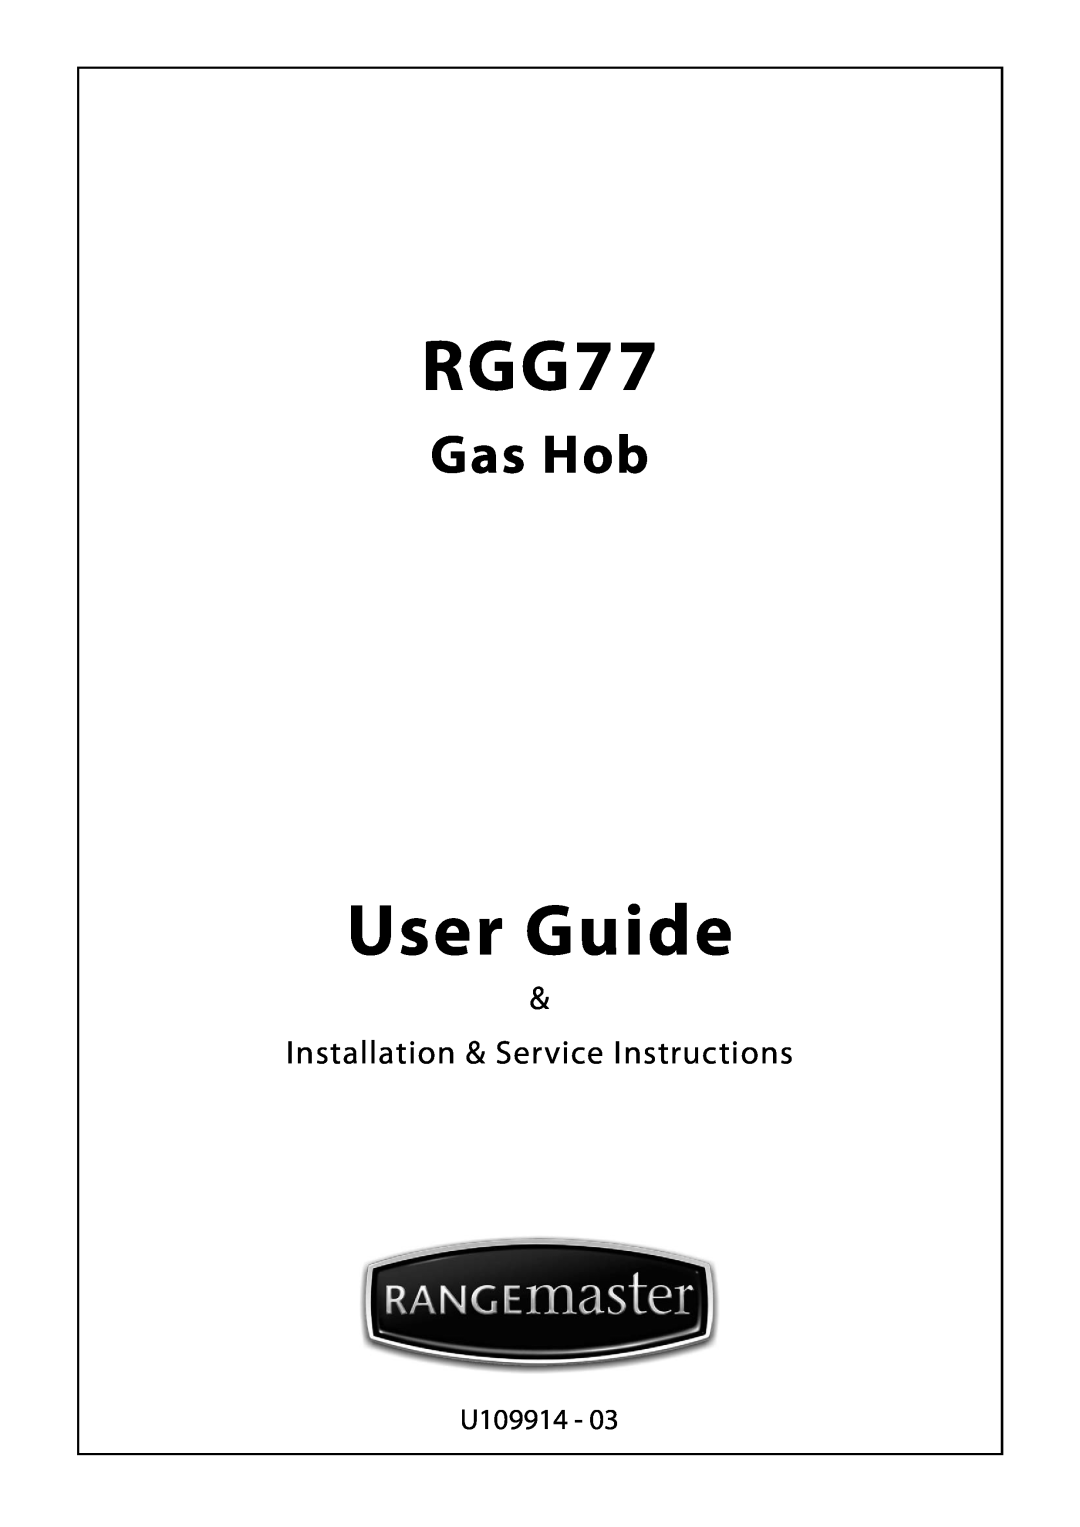 Rangemaster RGG77 manual User Guide, Gas Hob, Installation & Service Instructions, U109914 